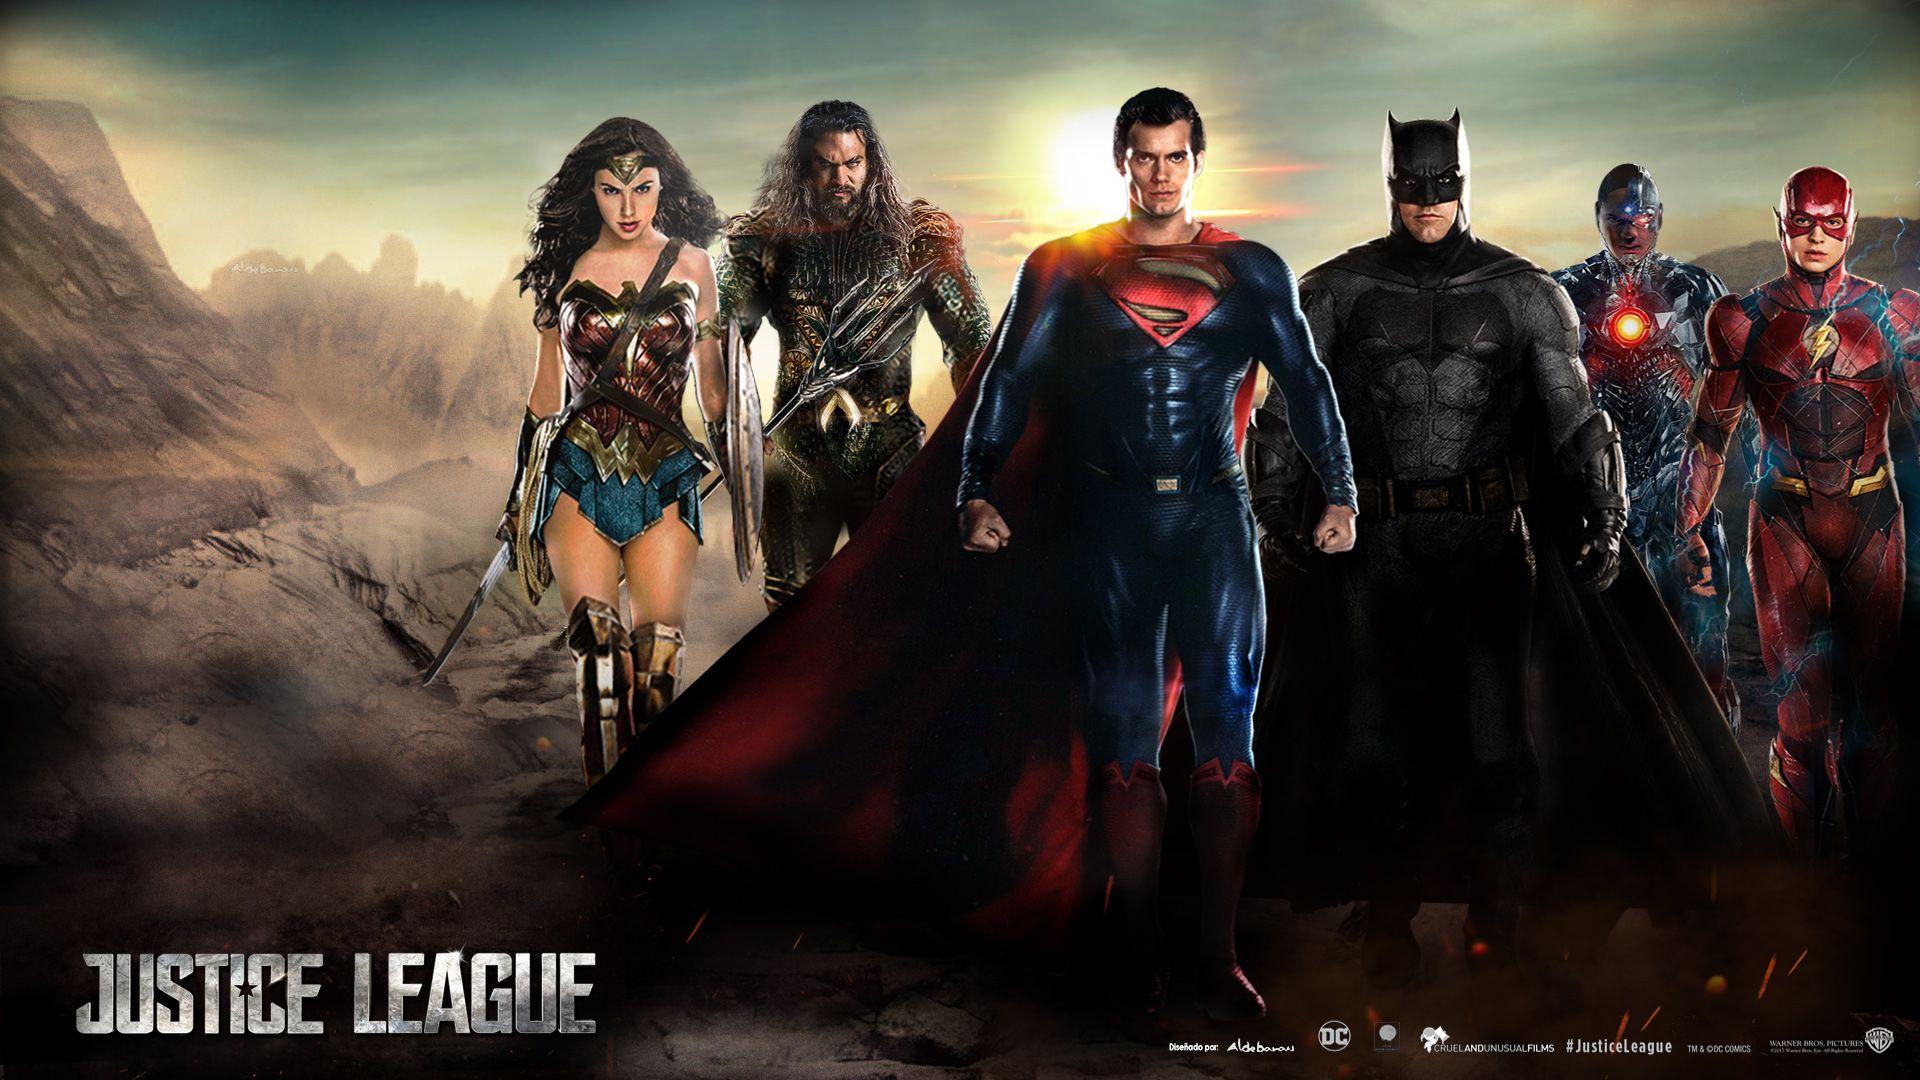 Justice League Movie Wallpaper High Definition Cinema Wallpaper 1080p